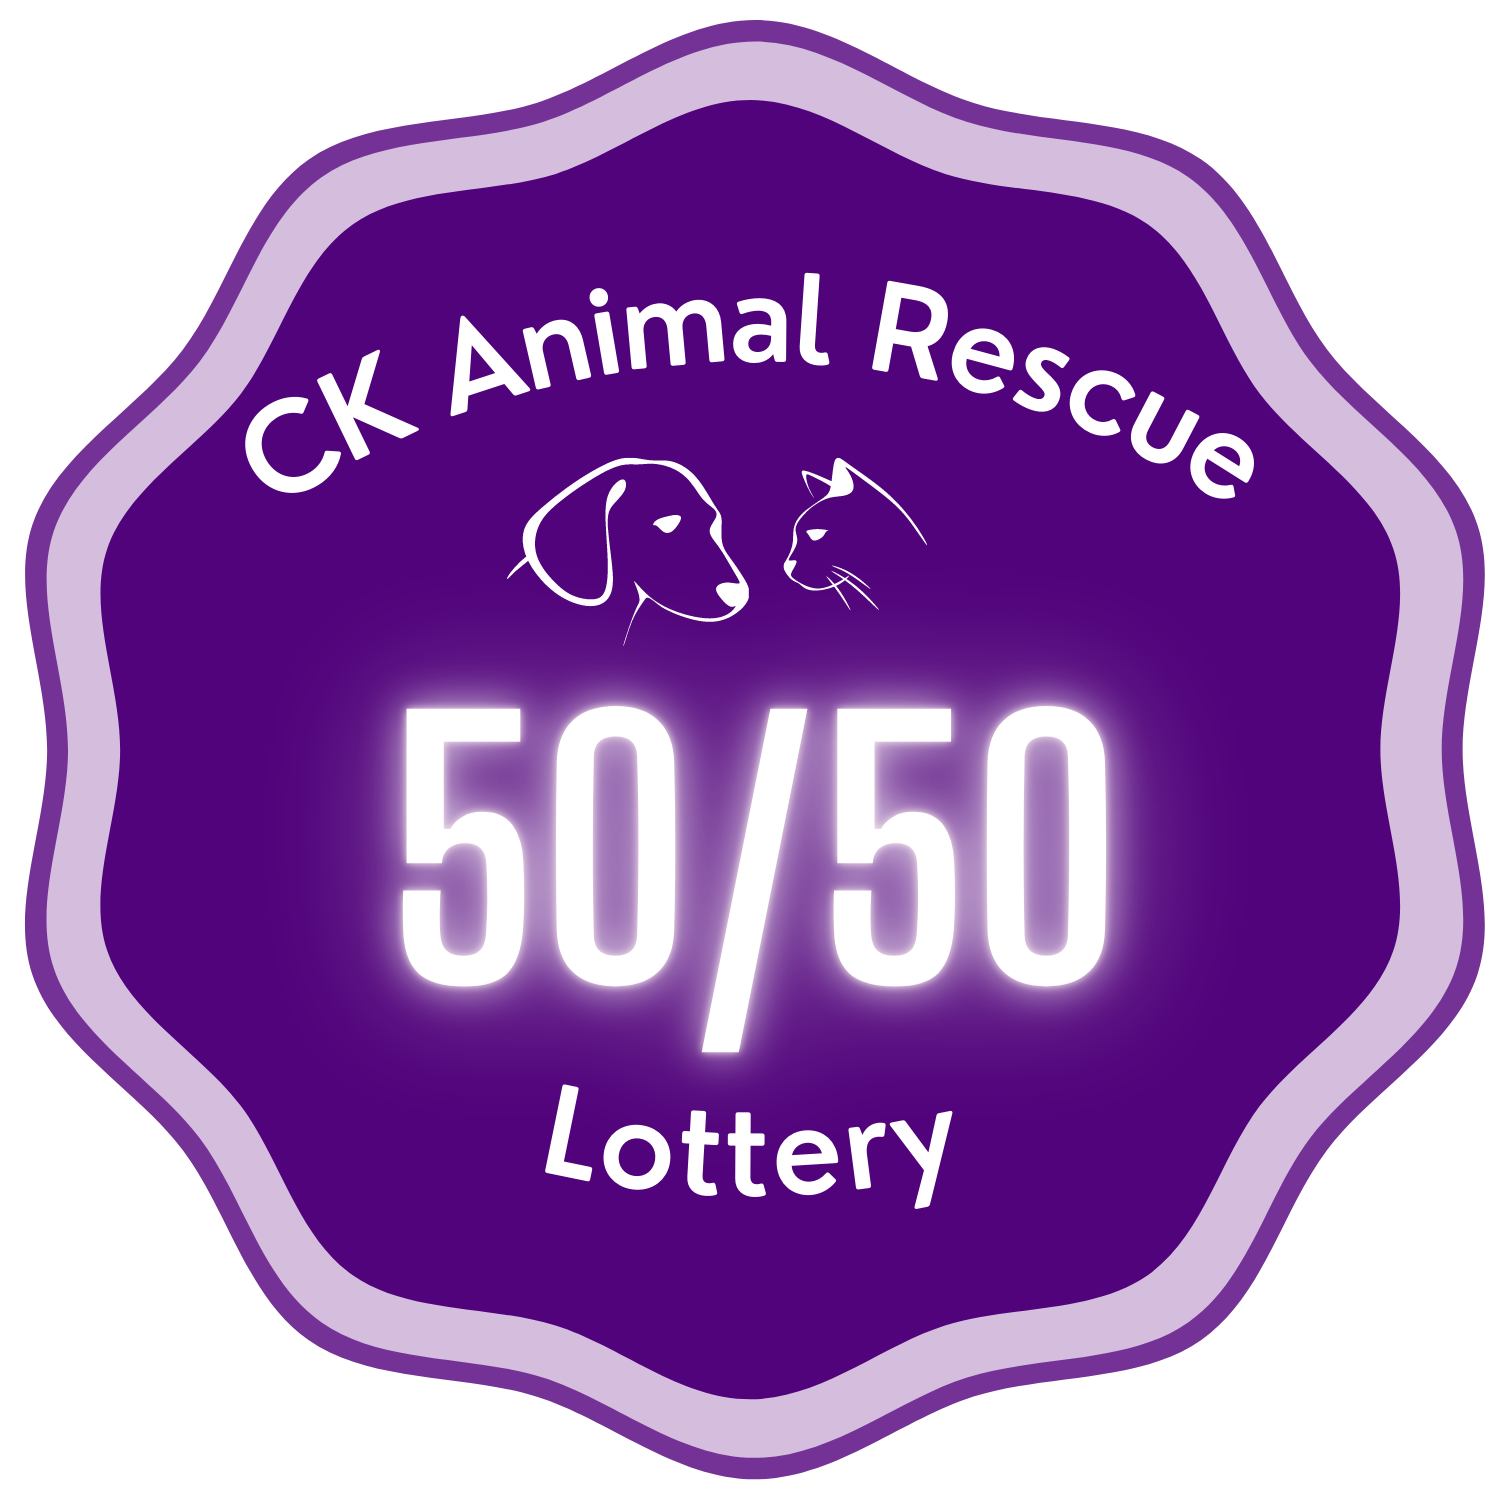 CK Animal Rescue